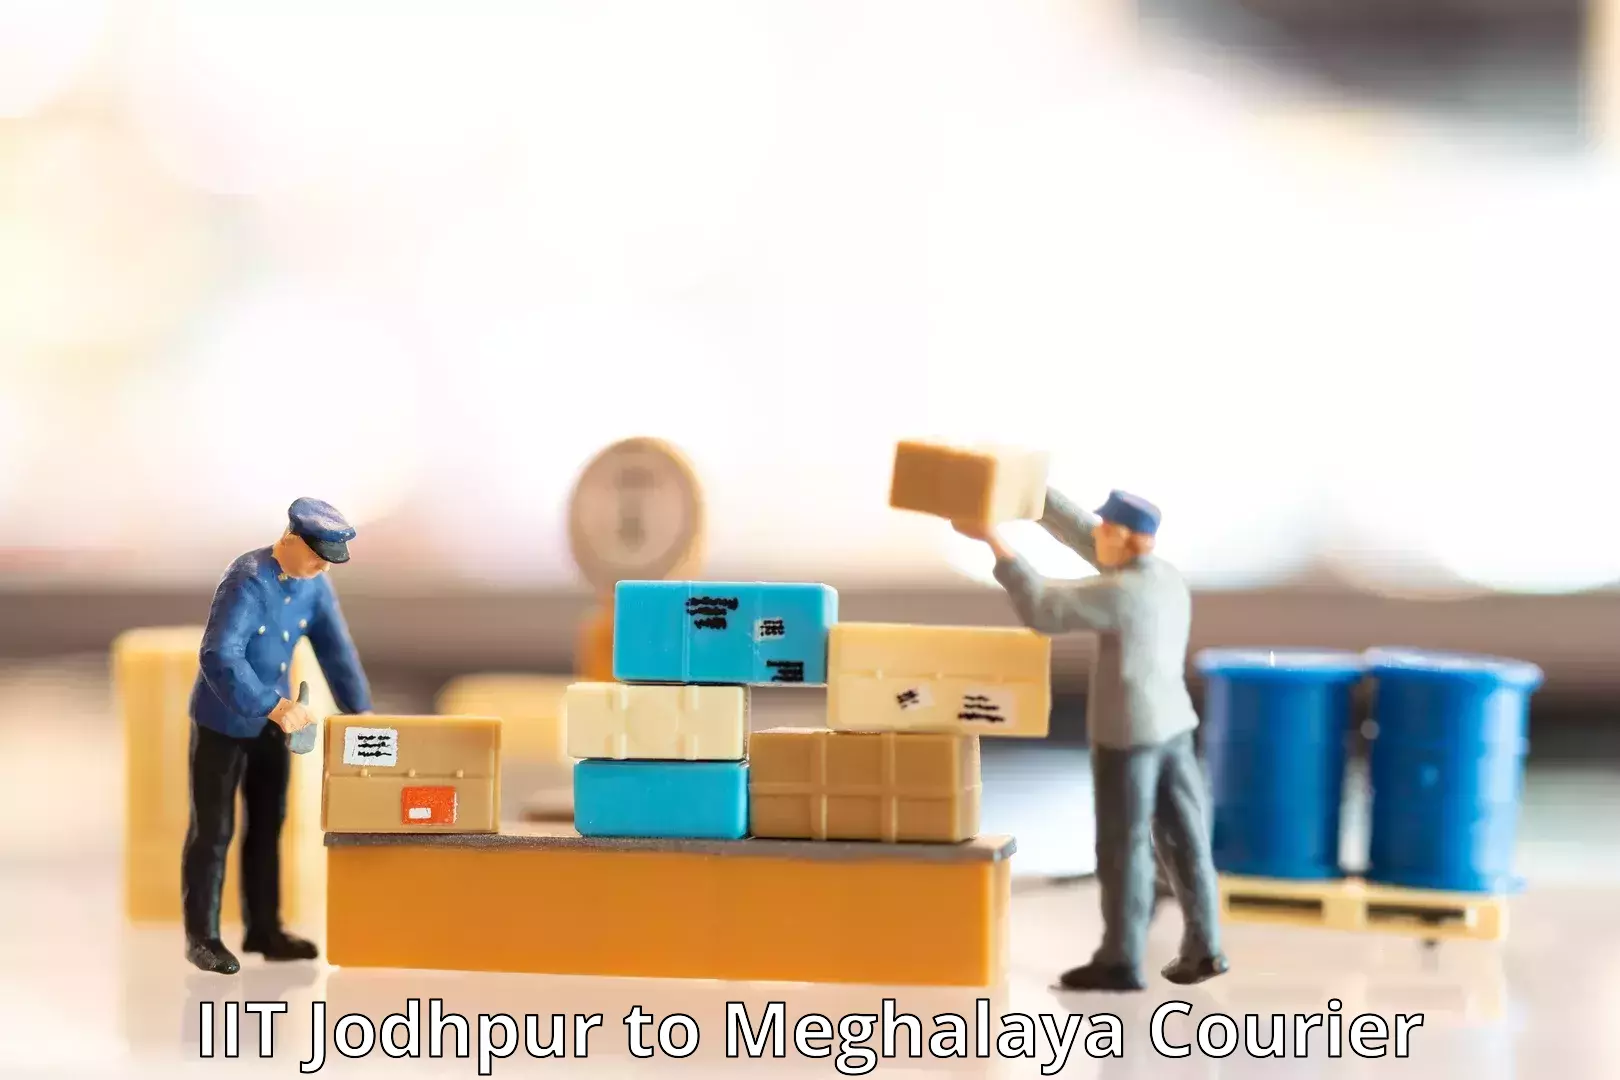 Express delivery capabilities IIT Jodhpur to Meghalaya